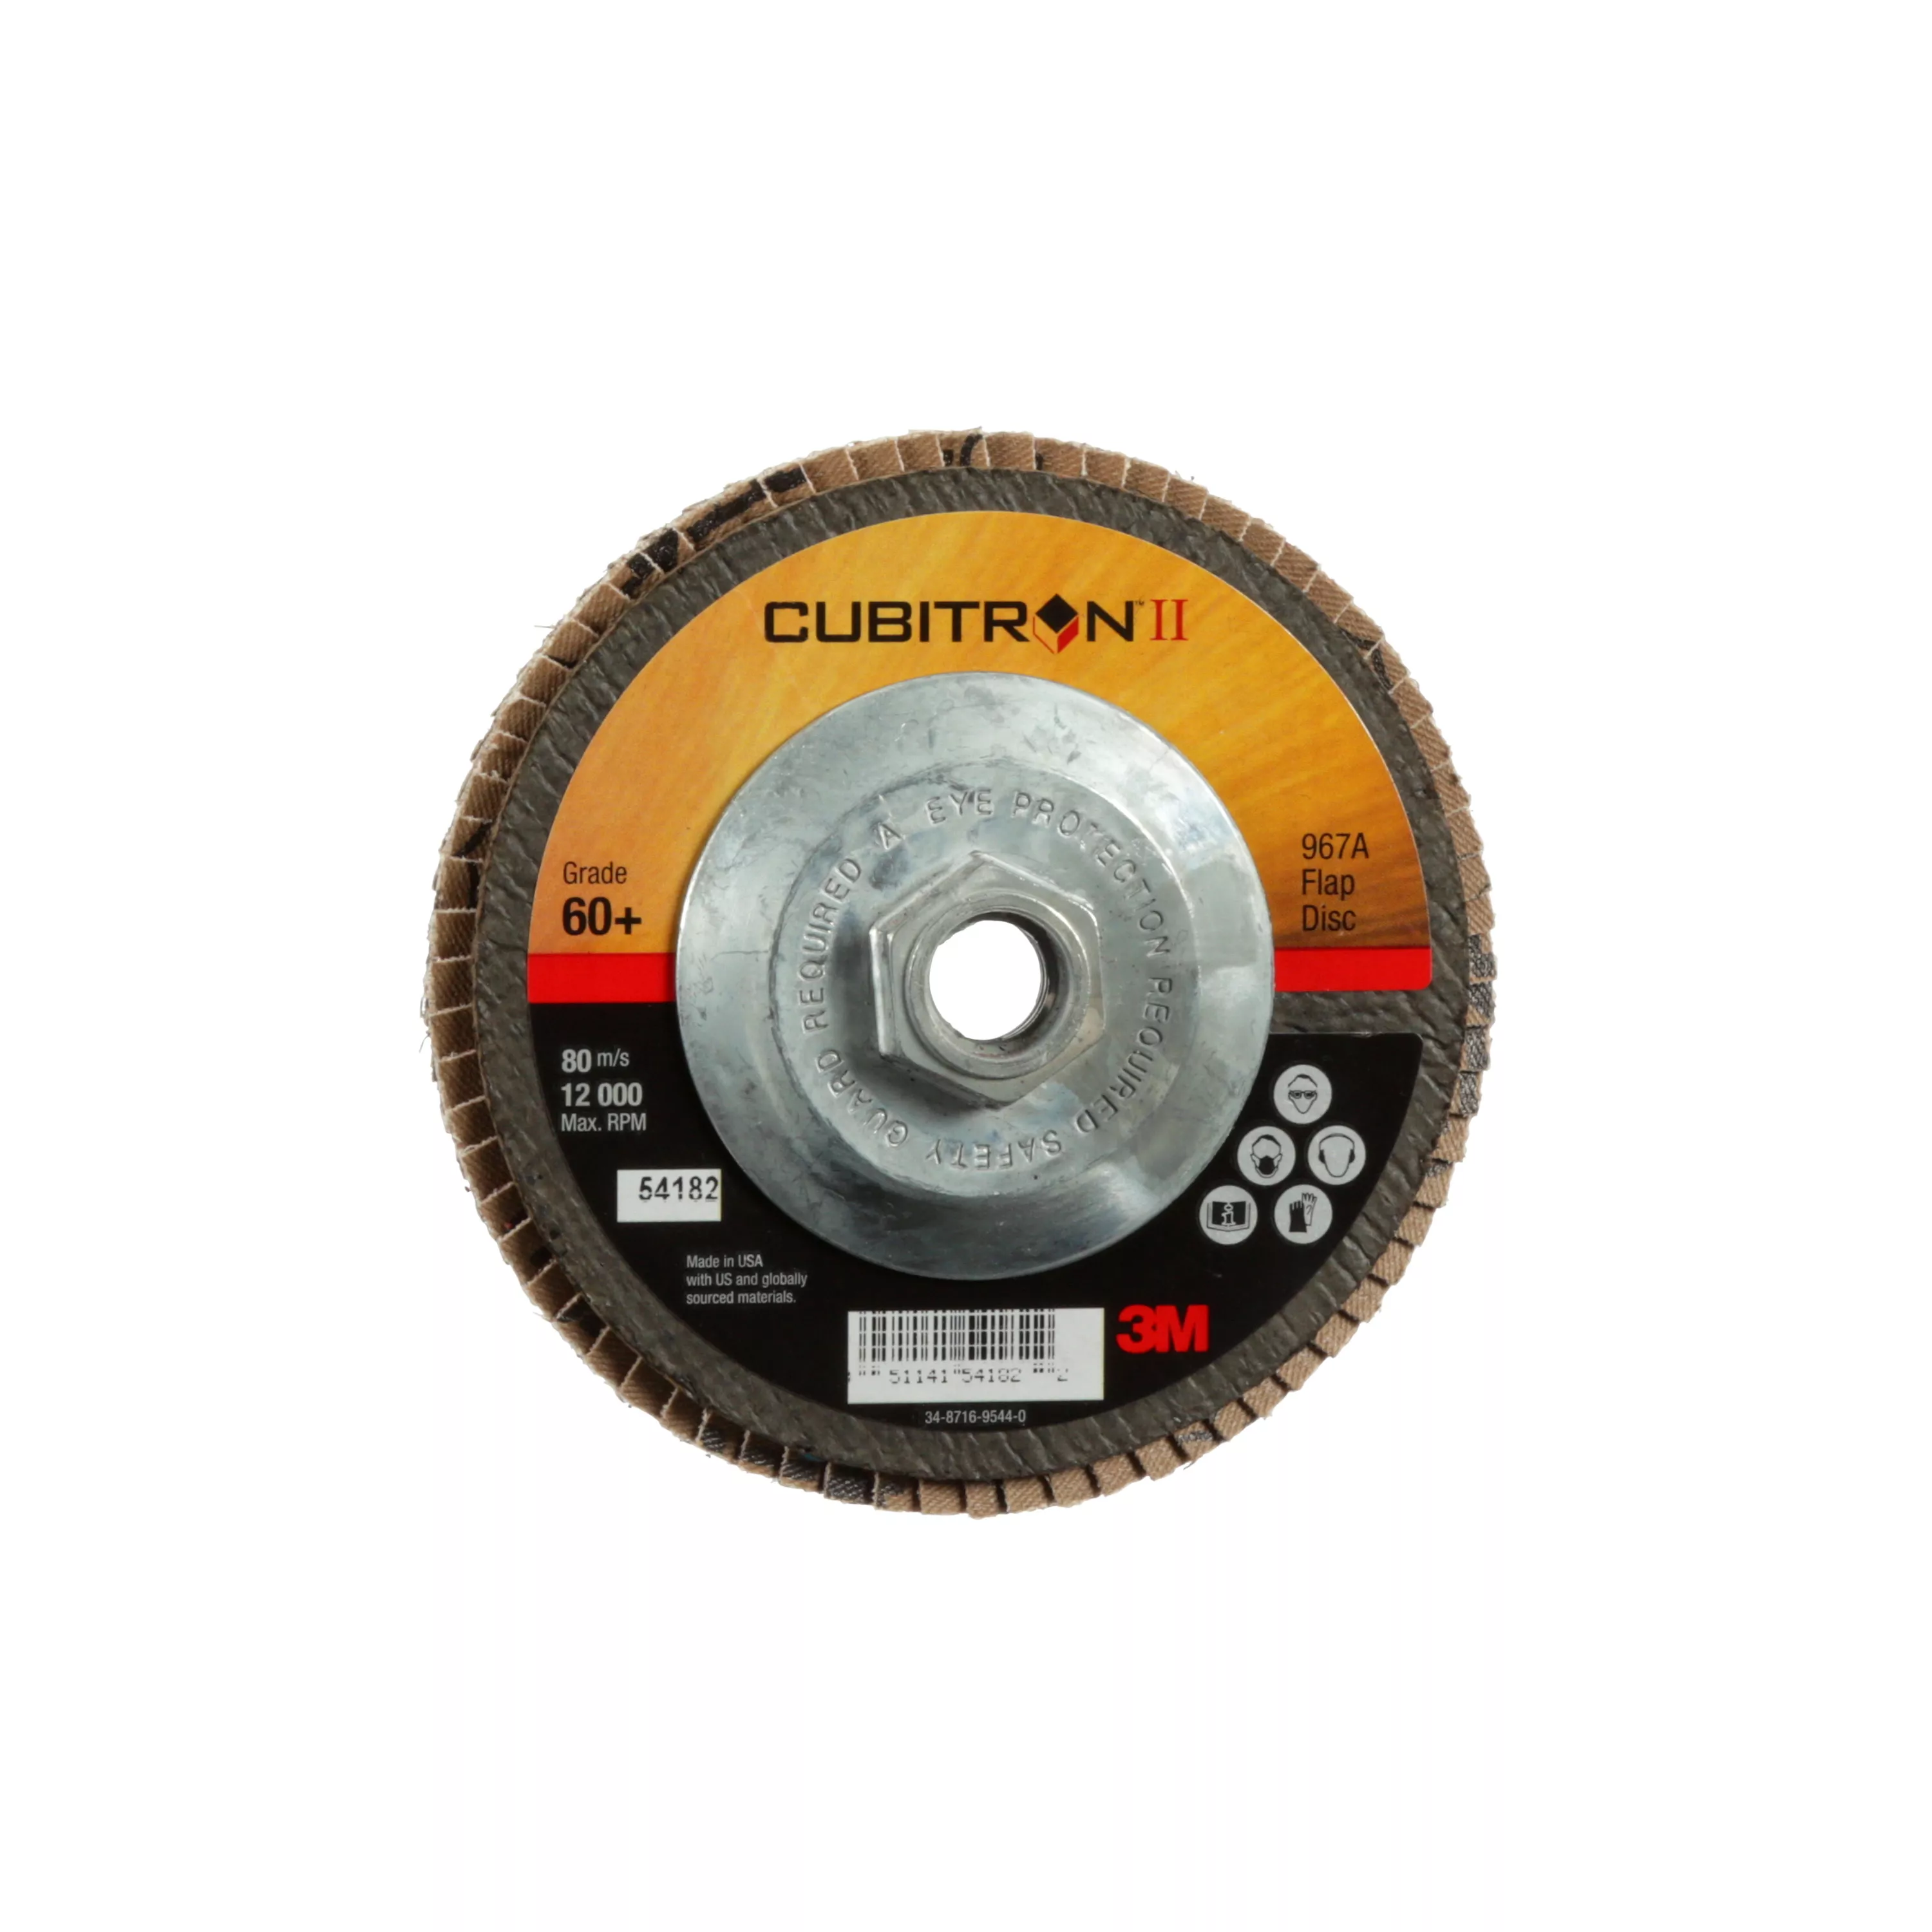 SKU 7100049201 | 3M™ Cubitron™ II Flap Disc 967A